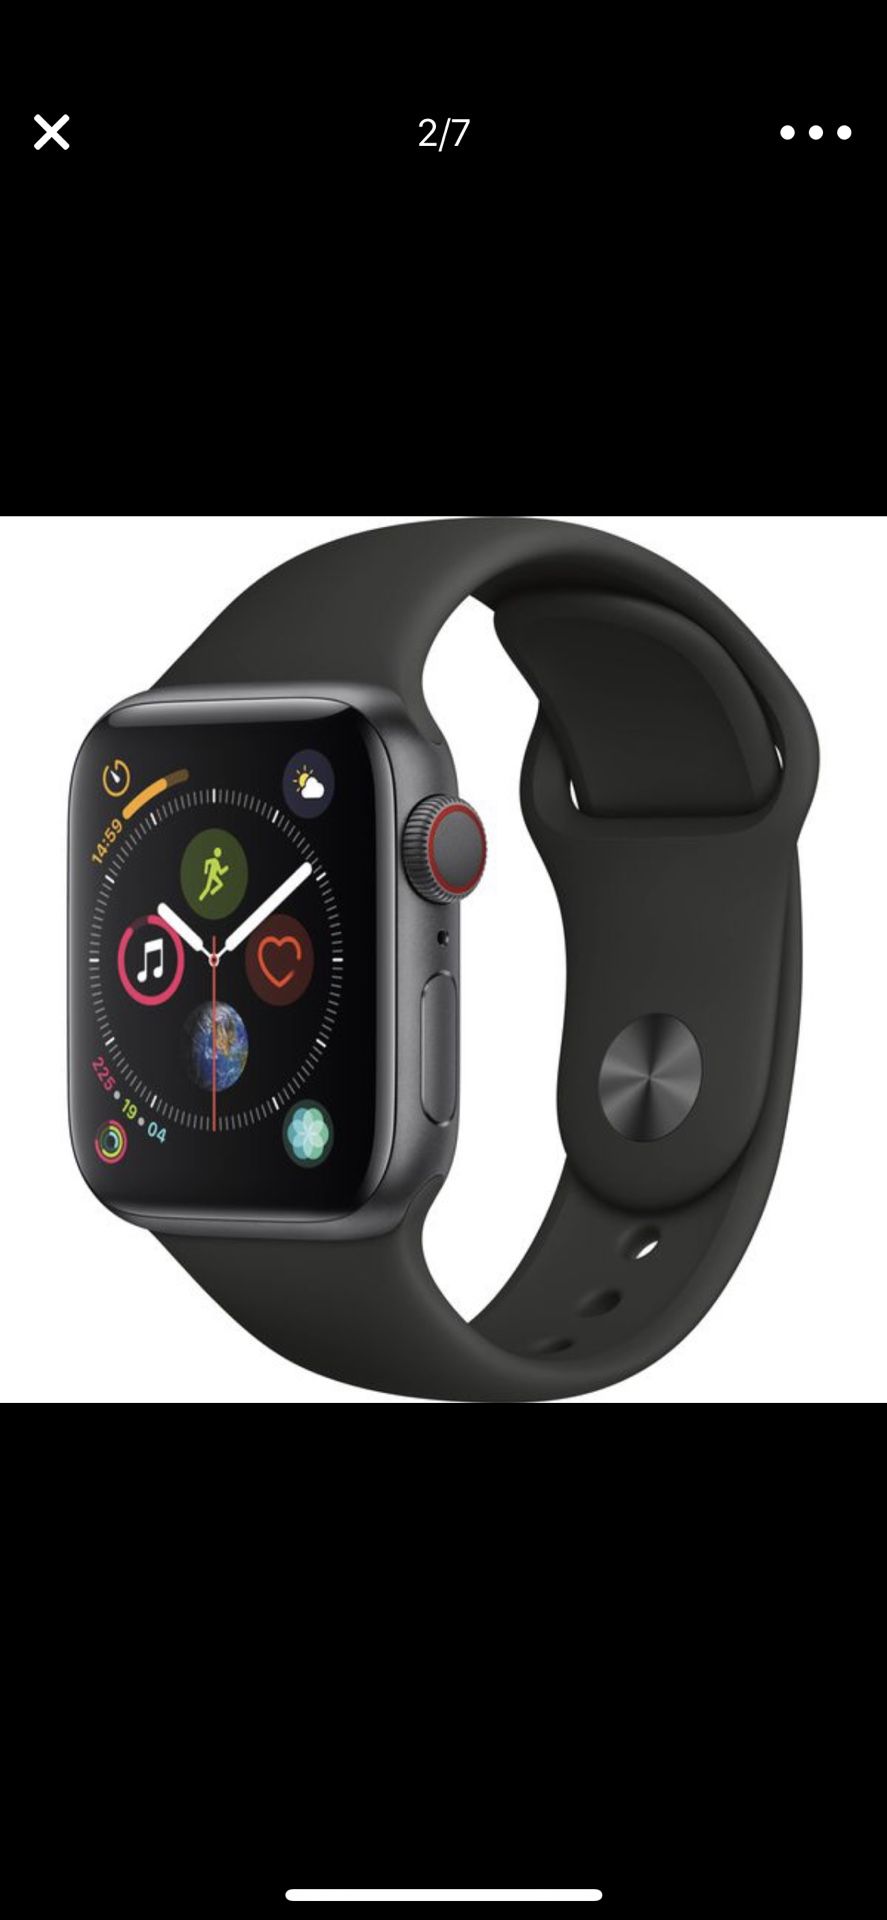 BRAND NEW Apple Watch series 4 GPS